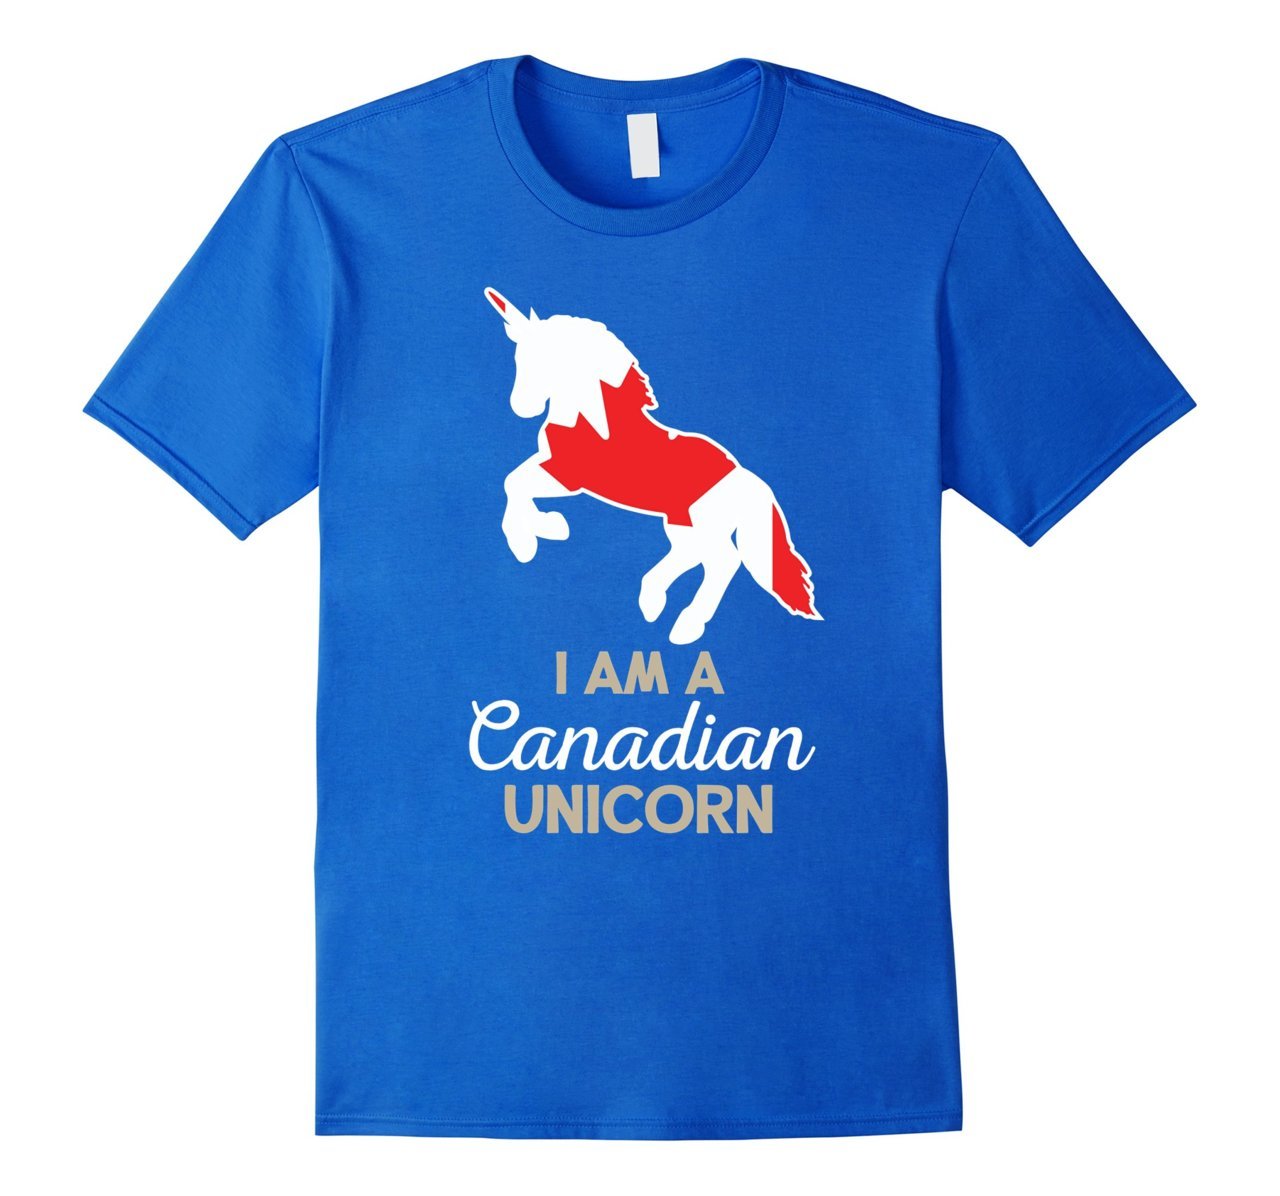 Canadian Unicorn Shirt.jpg